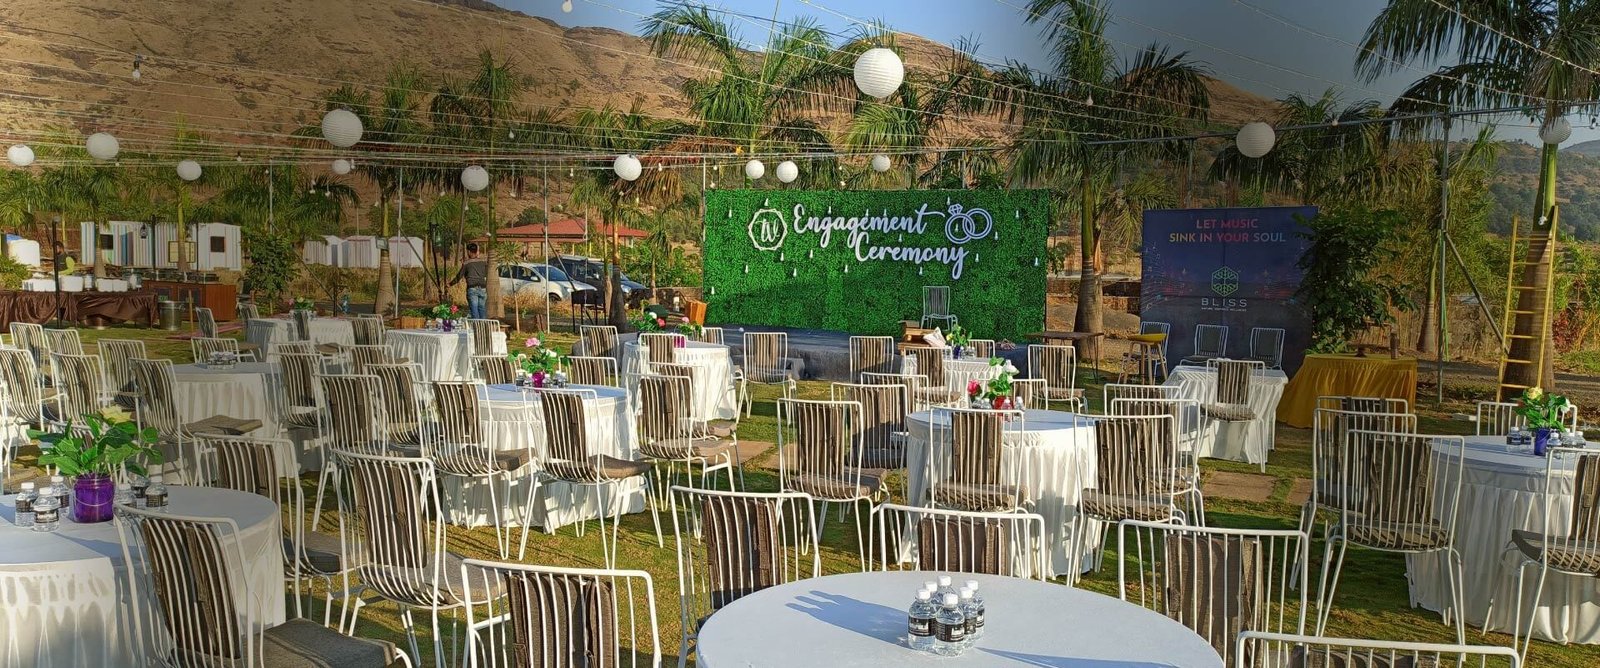 Best Wedding and Engagement Destination in Igatpuri